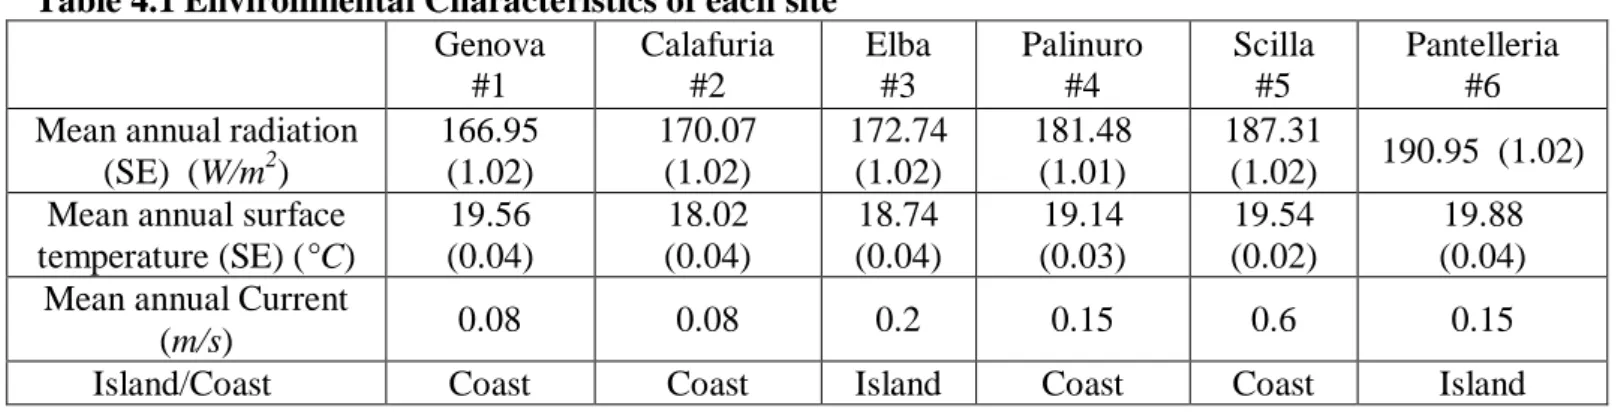 Table 4.1 Environmental Characteristics of each site Genova   #1   Calafuria  #2   Elba  #3   Palinuro  #4   Scilla  #5   Pantelleria  #6   Mean annual radiation 